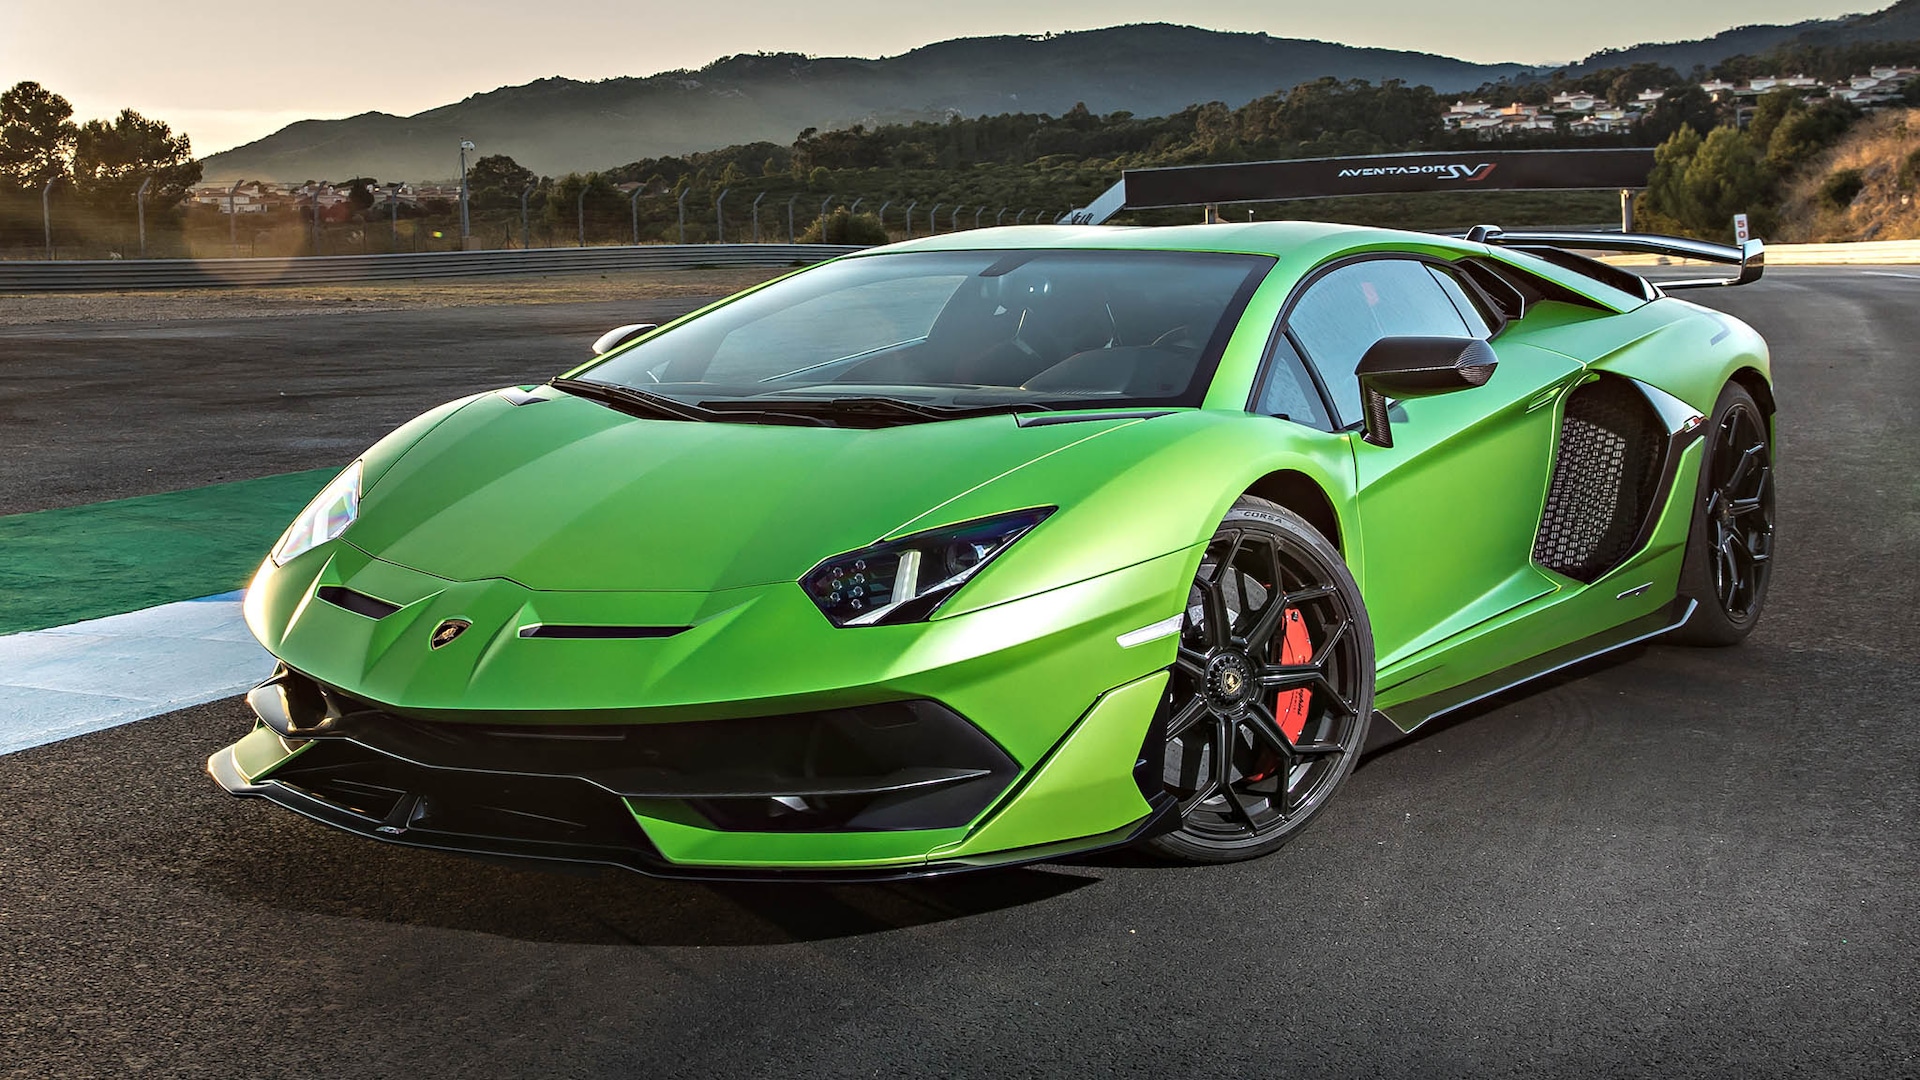 2022 Lamborghini Aventador Prices, Reviews, and Photos - MotorTrend